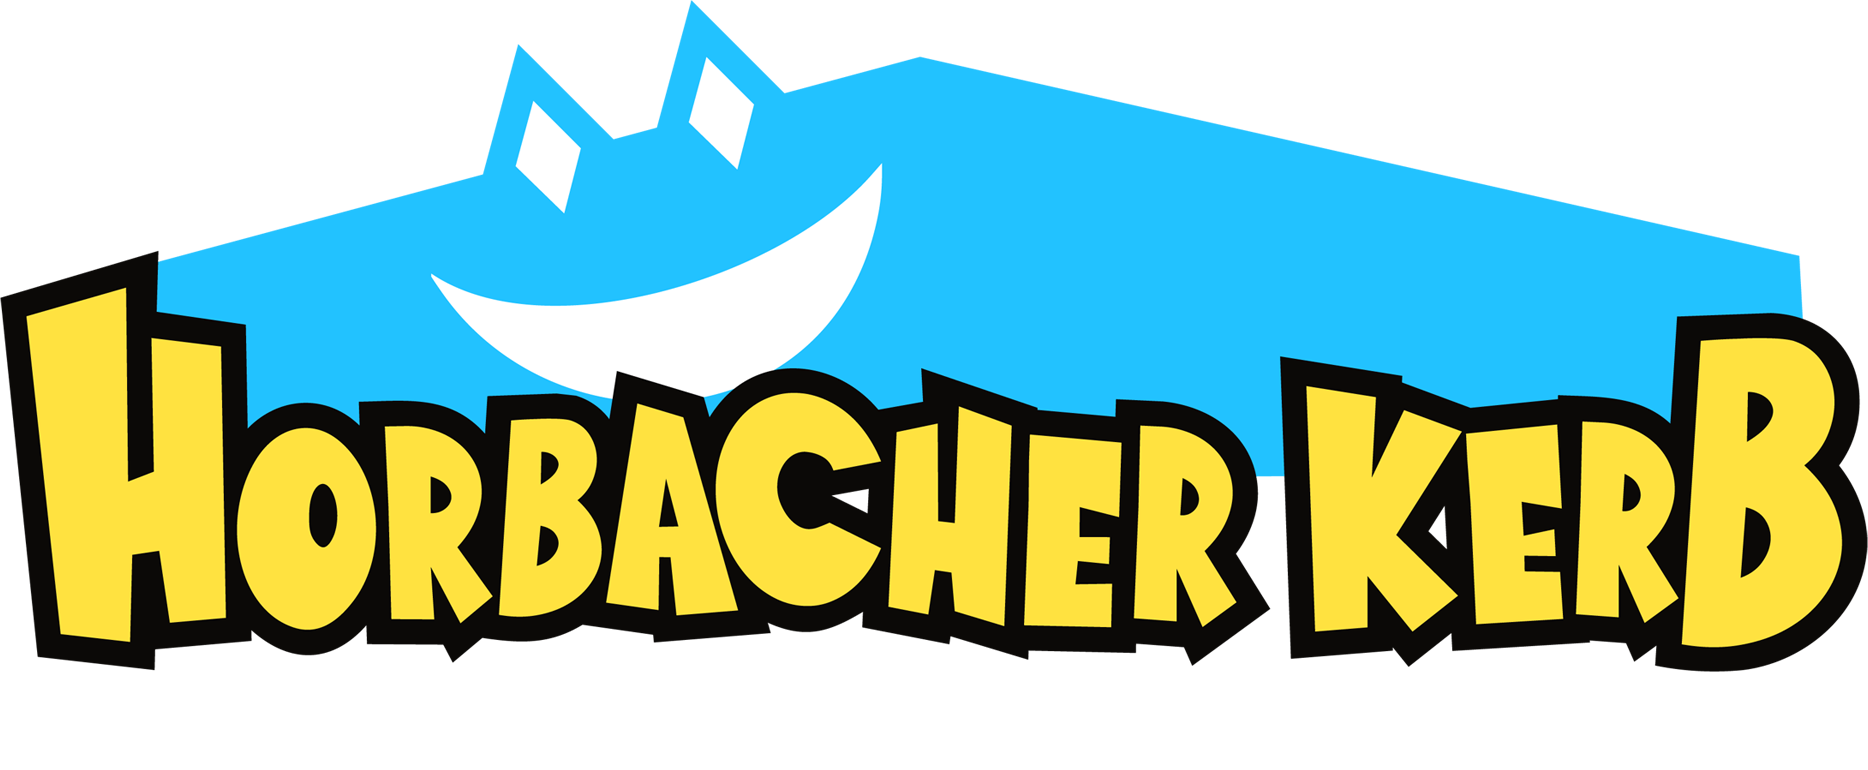 (c) Horbacher-kerb.de